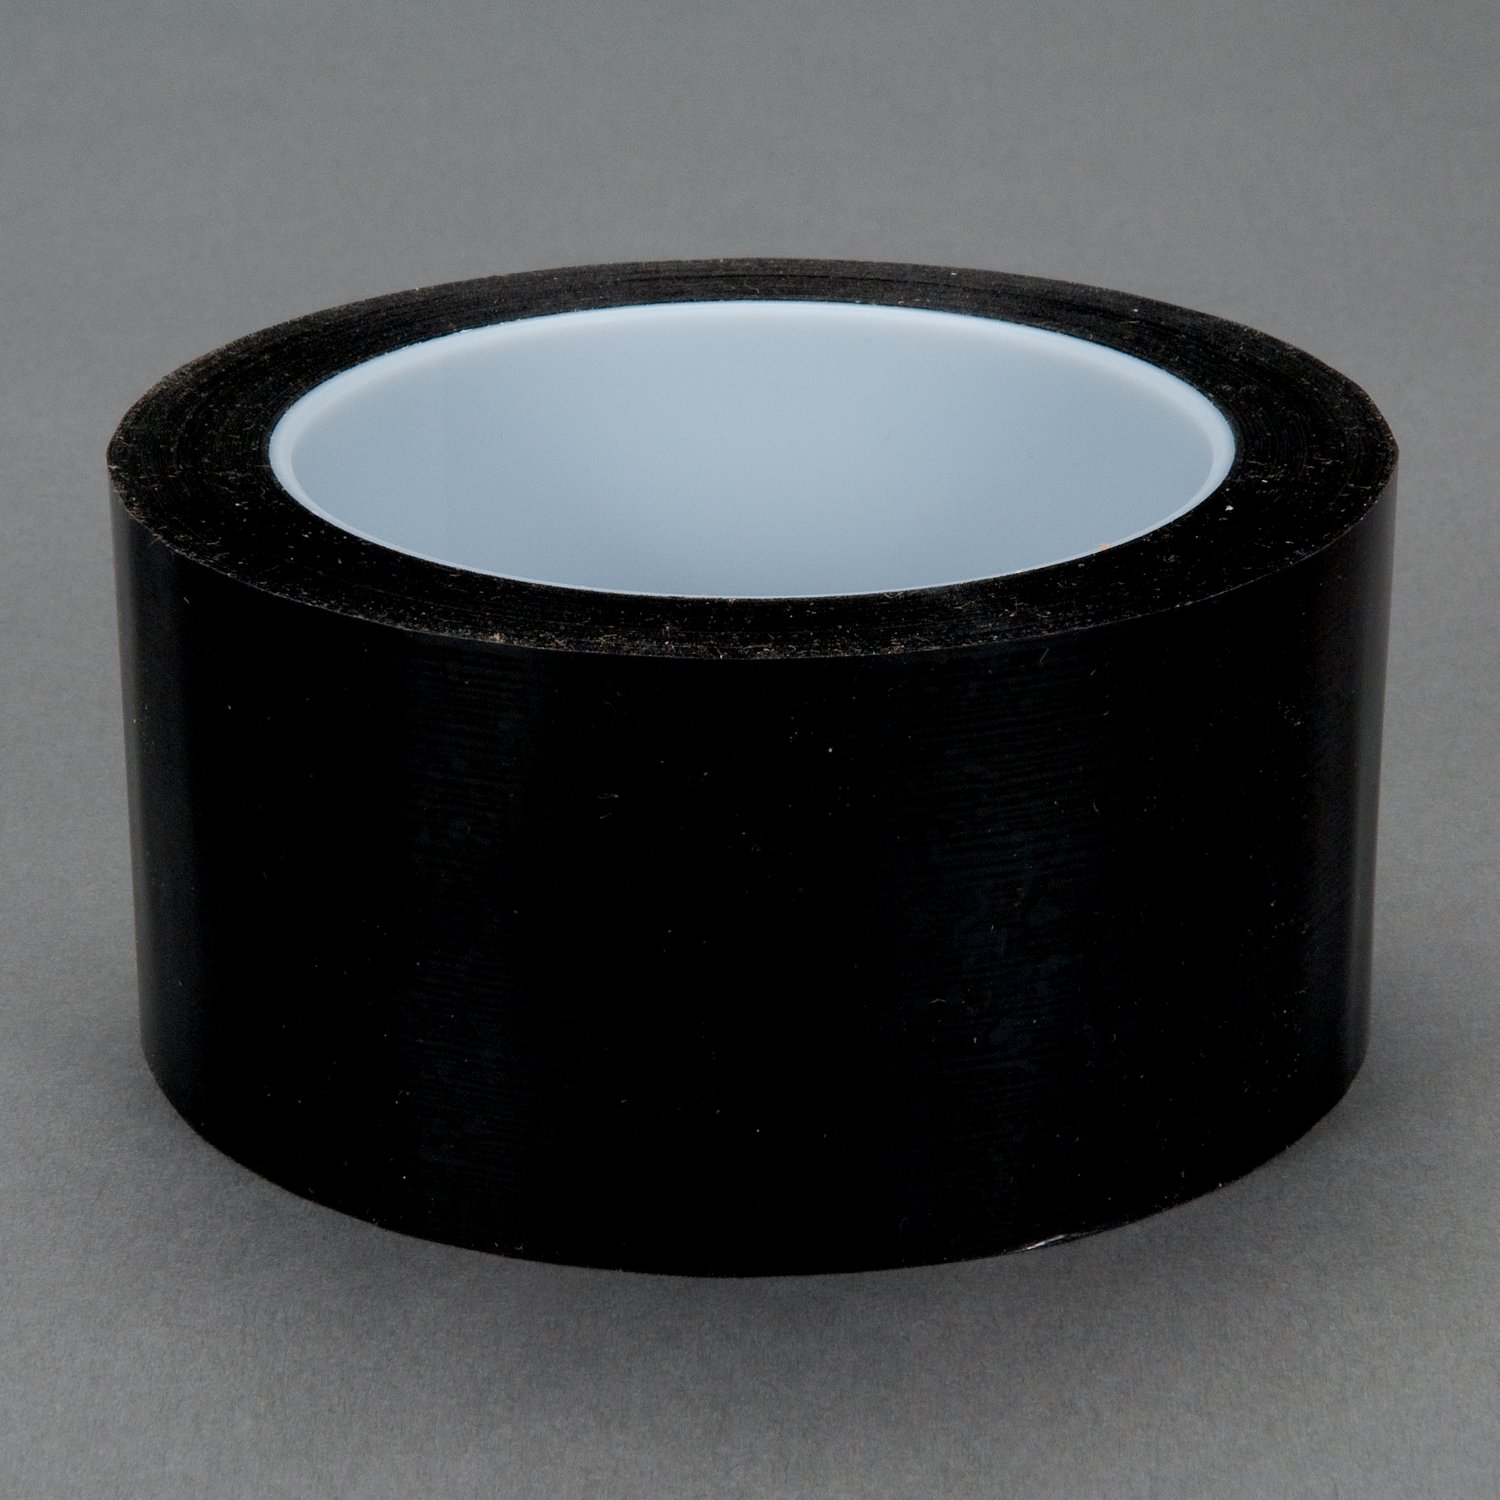 7000048409 - 3M Polyester Film Tape 850, Black, 2 in x 72 yd, 1.9 mil, 24 rolls per
case